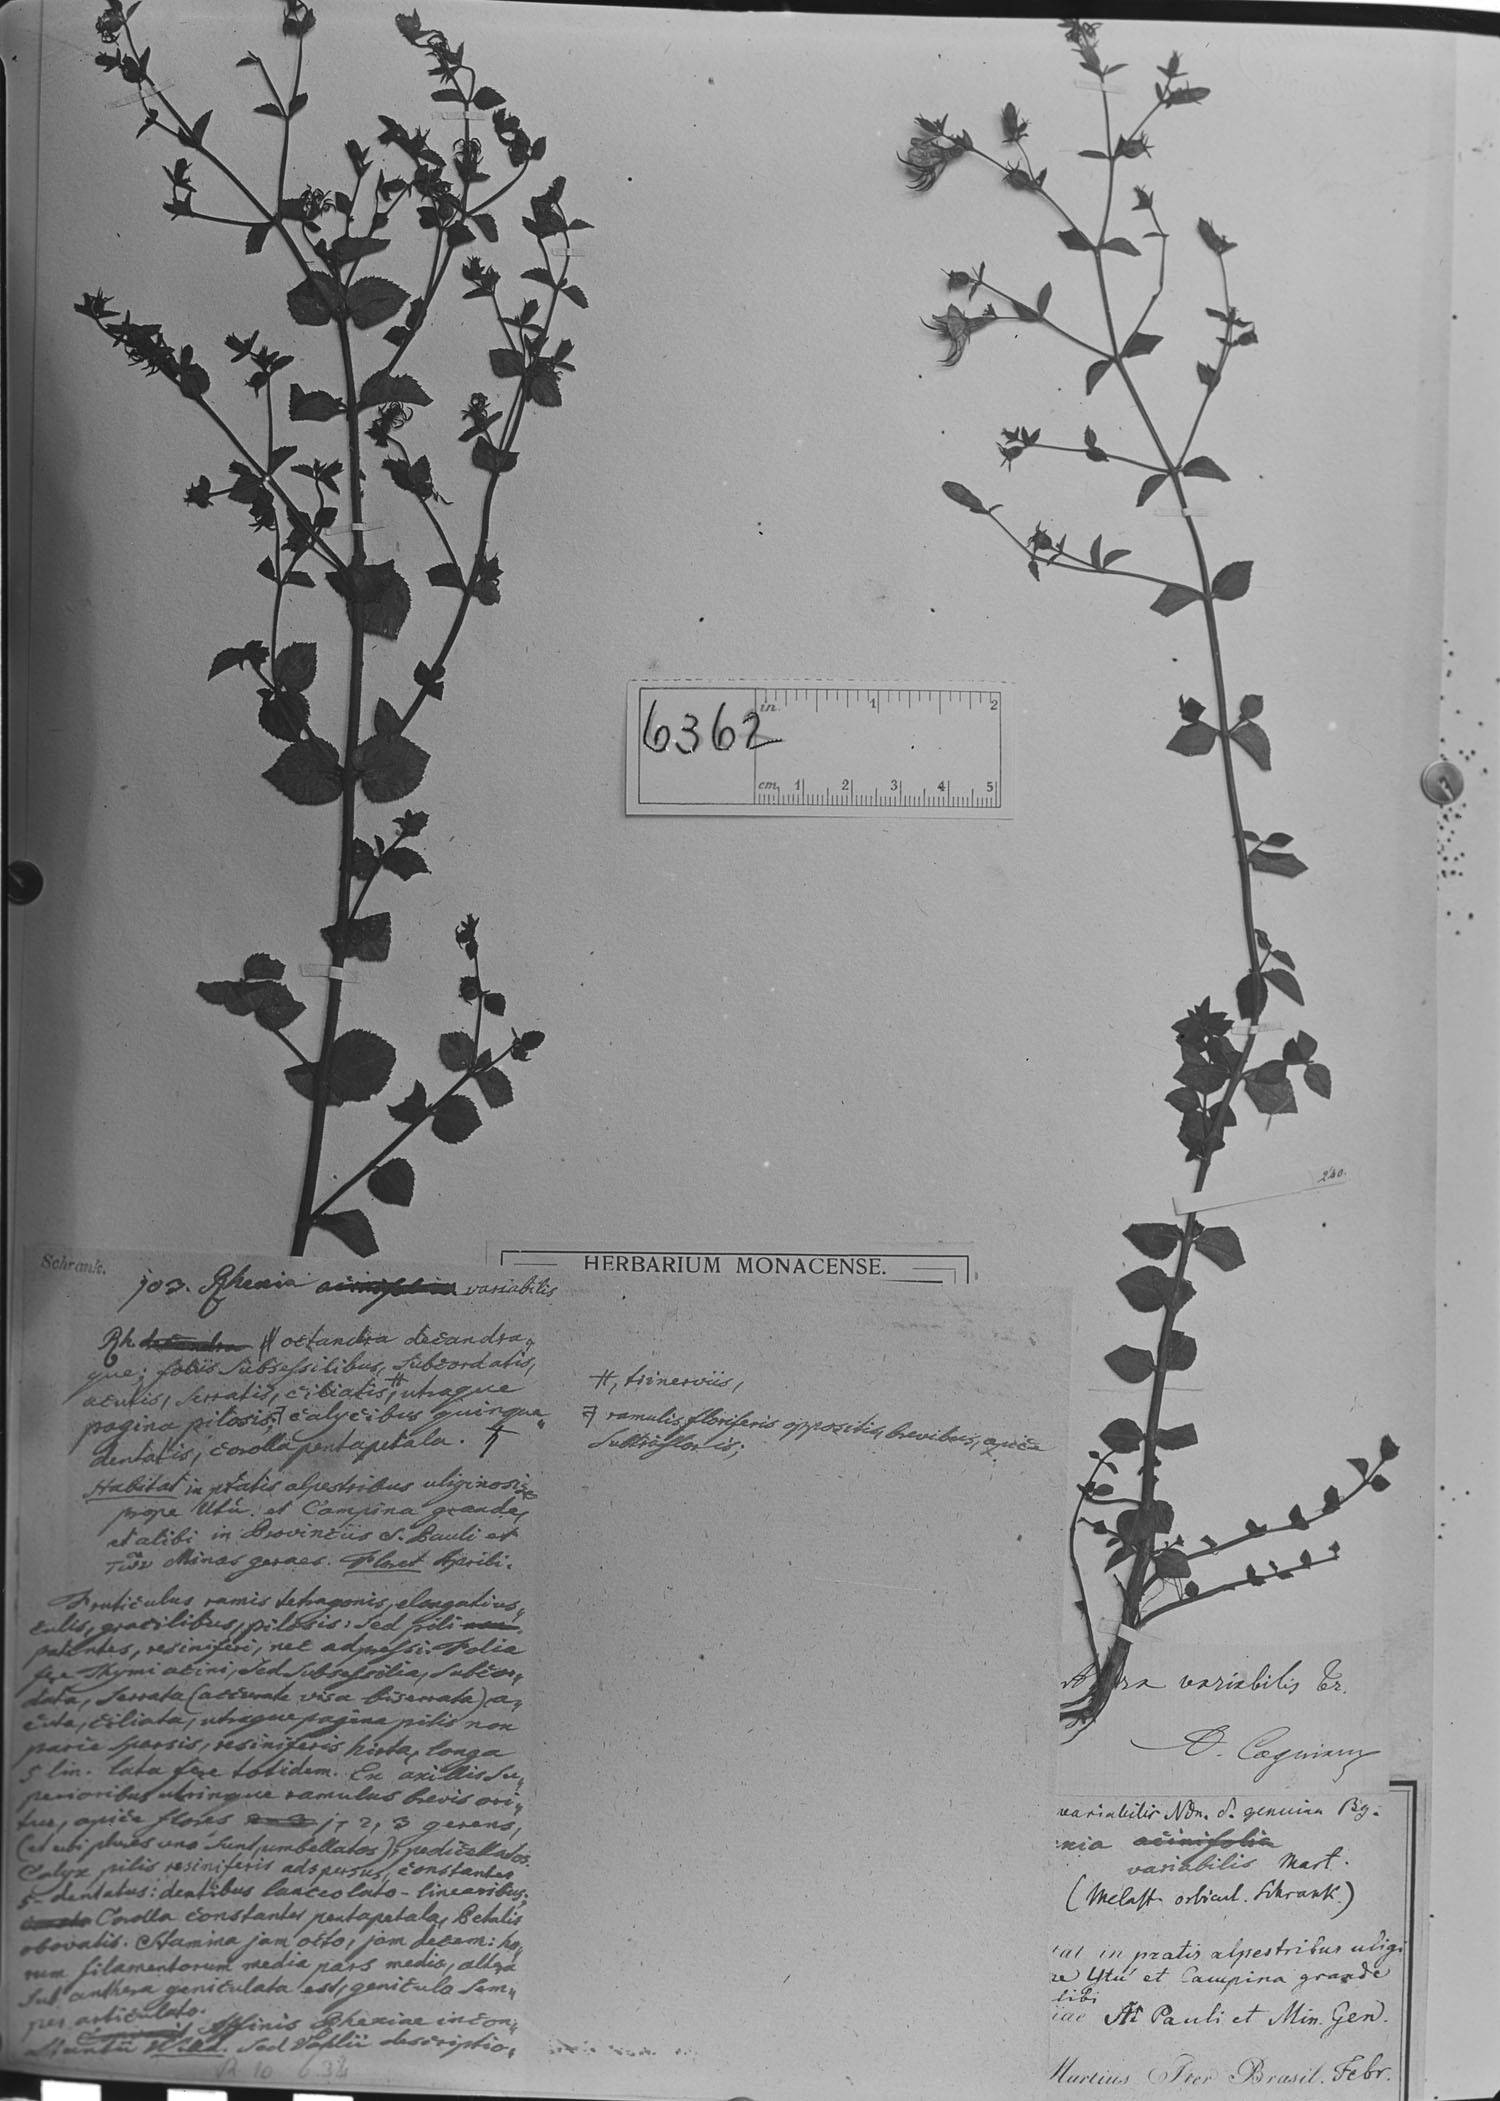 Acisanthera variabilis image